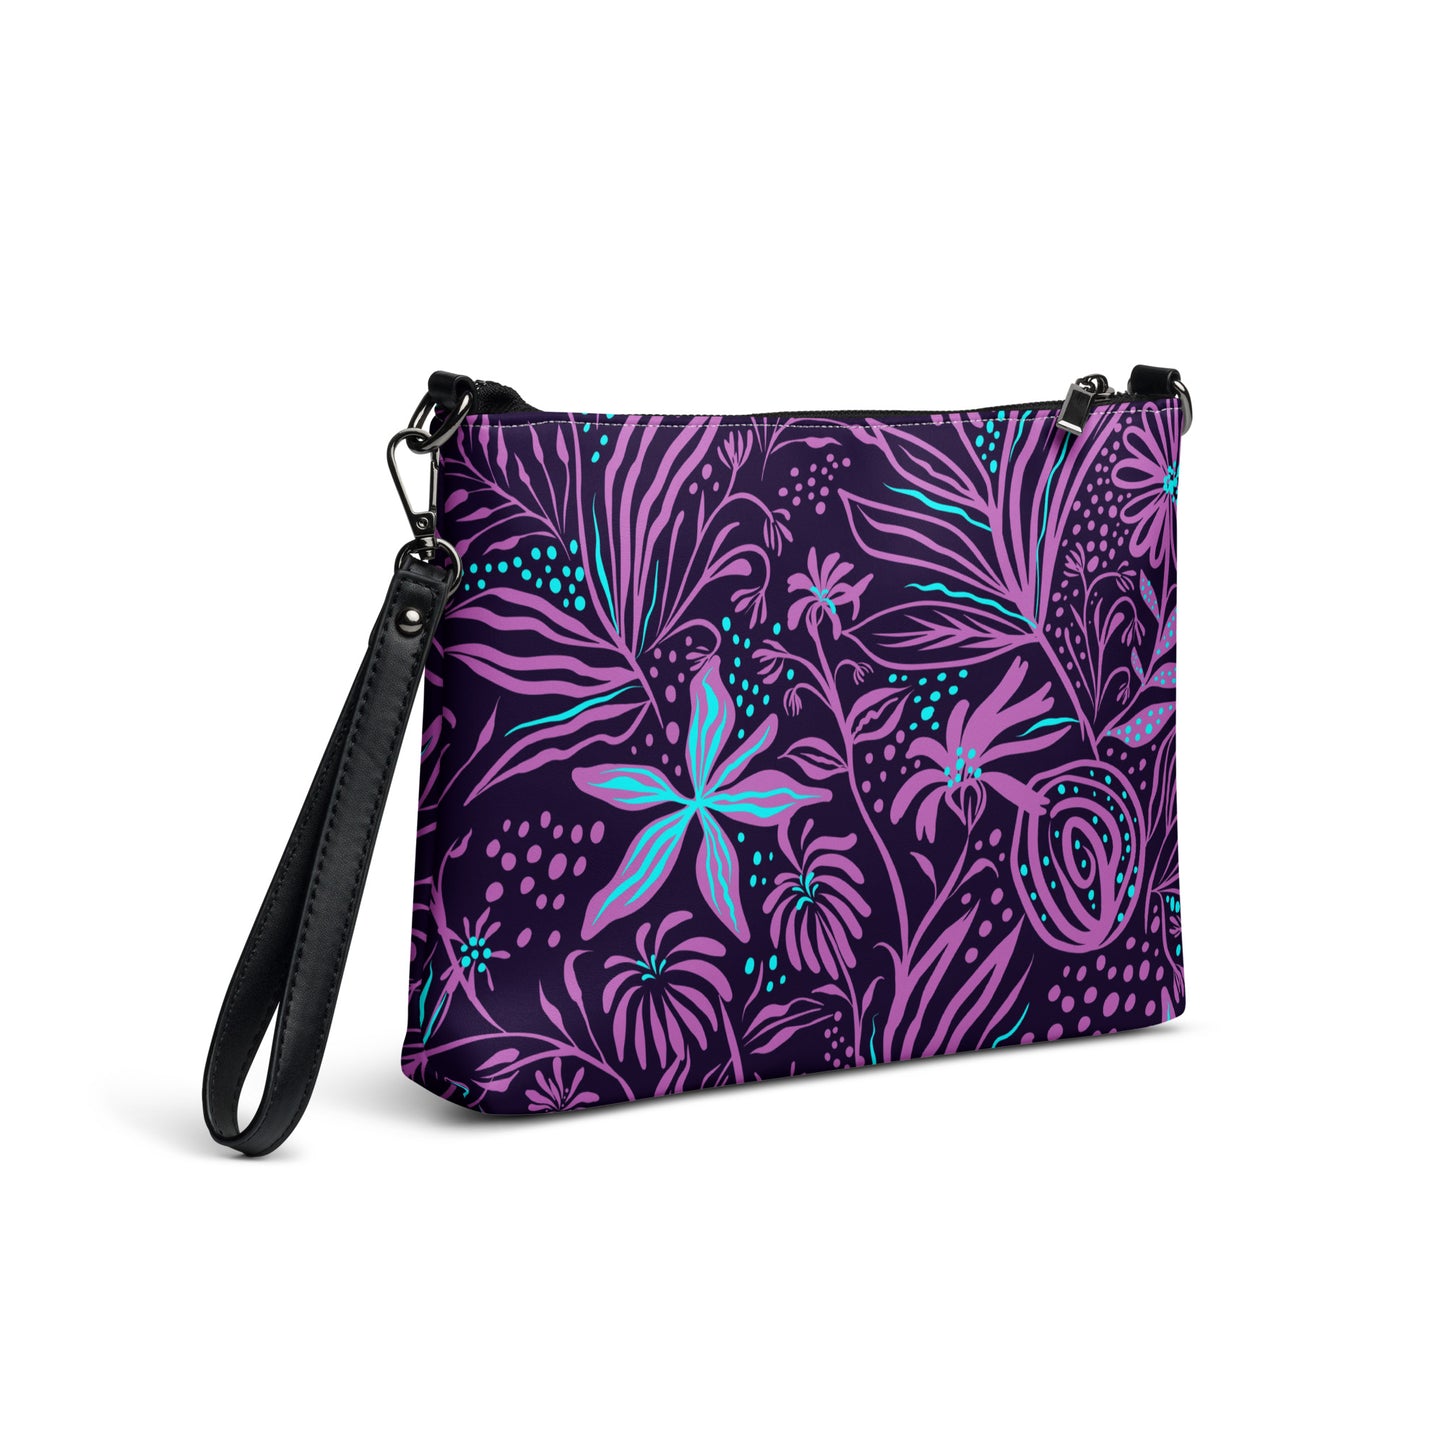 Purple Floral Design Crossbody bag,  Purple Floral Handbag